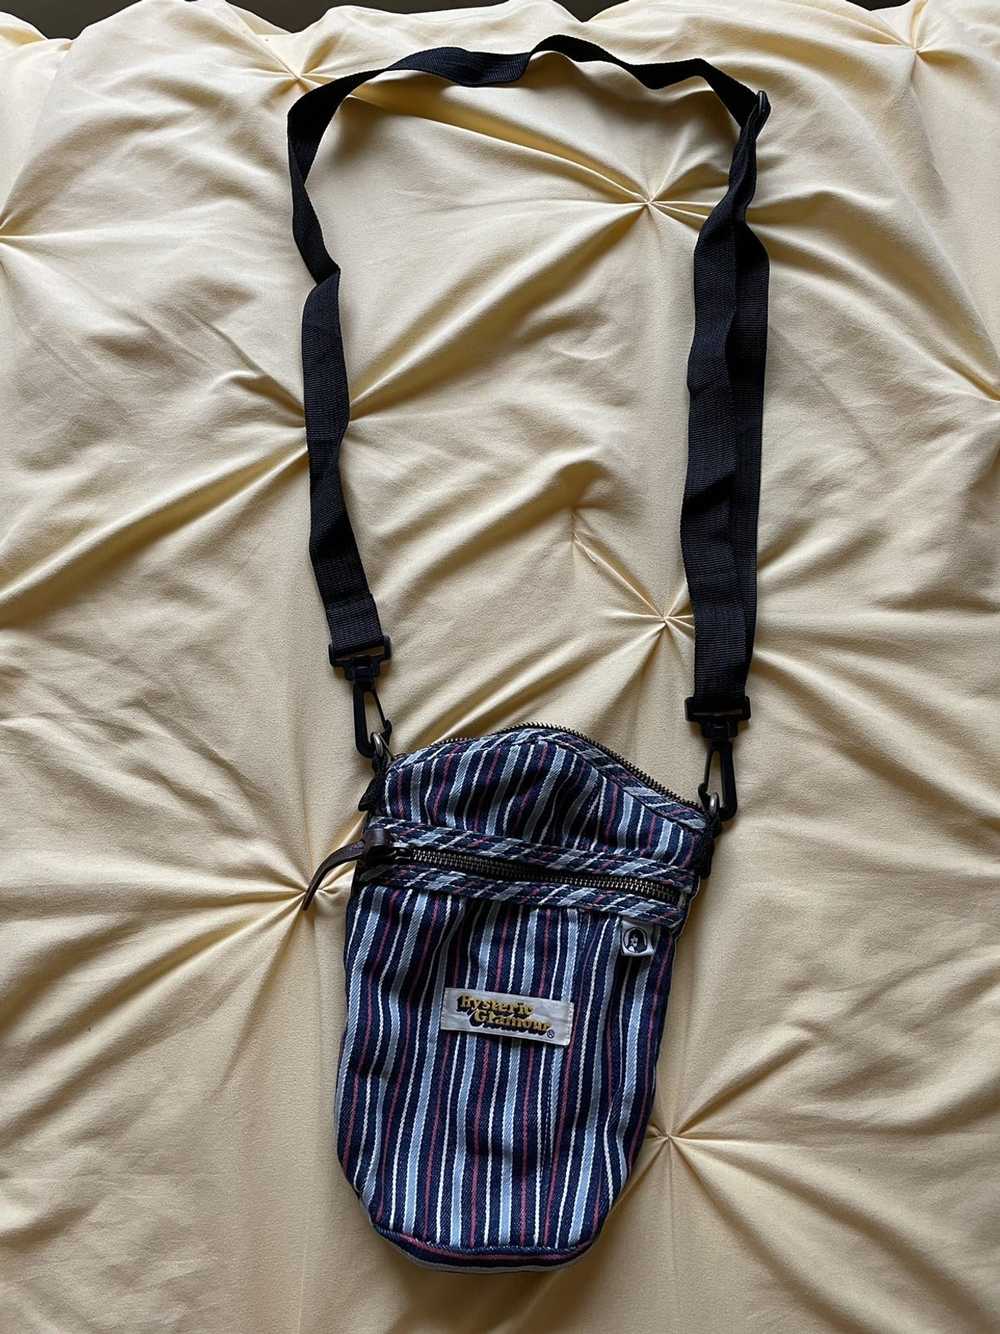 Hysteric Glamour Multi colored stripe shoulder bag - image 2